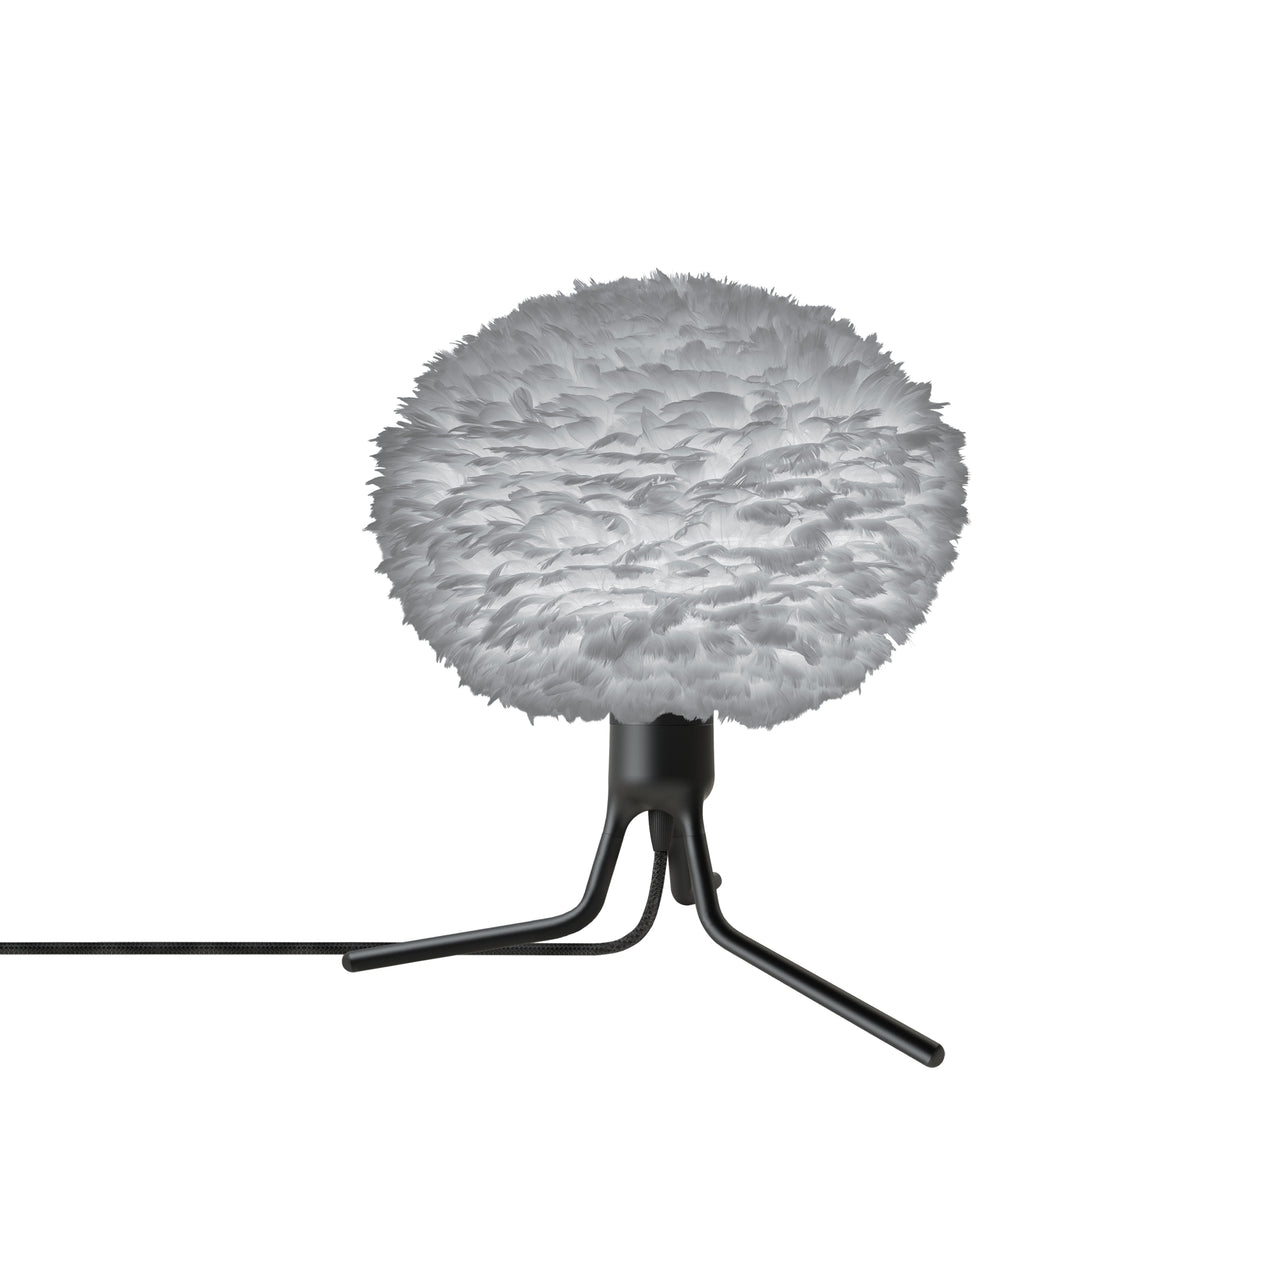 Eos Adjustable Tripod Table Lamp: Large - 25.6